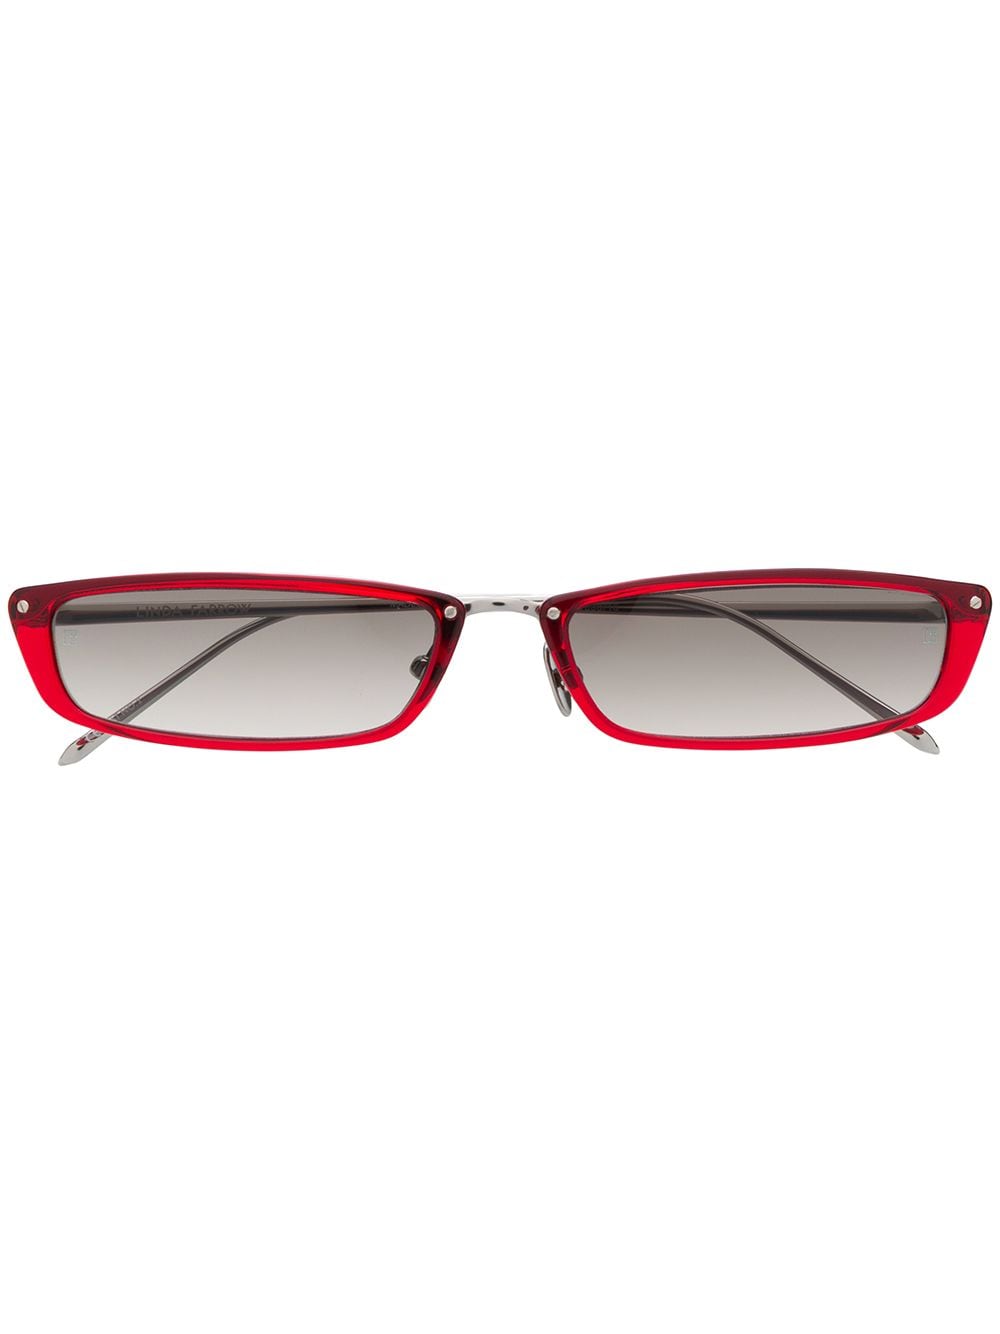 Image 1 of Linda Farrow rectangular frame sunglasses